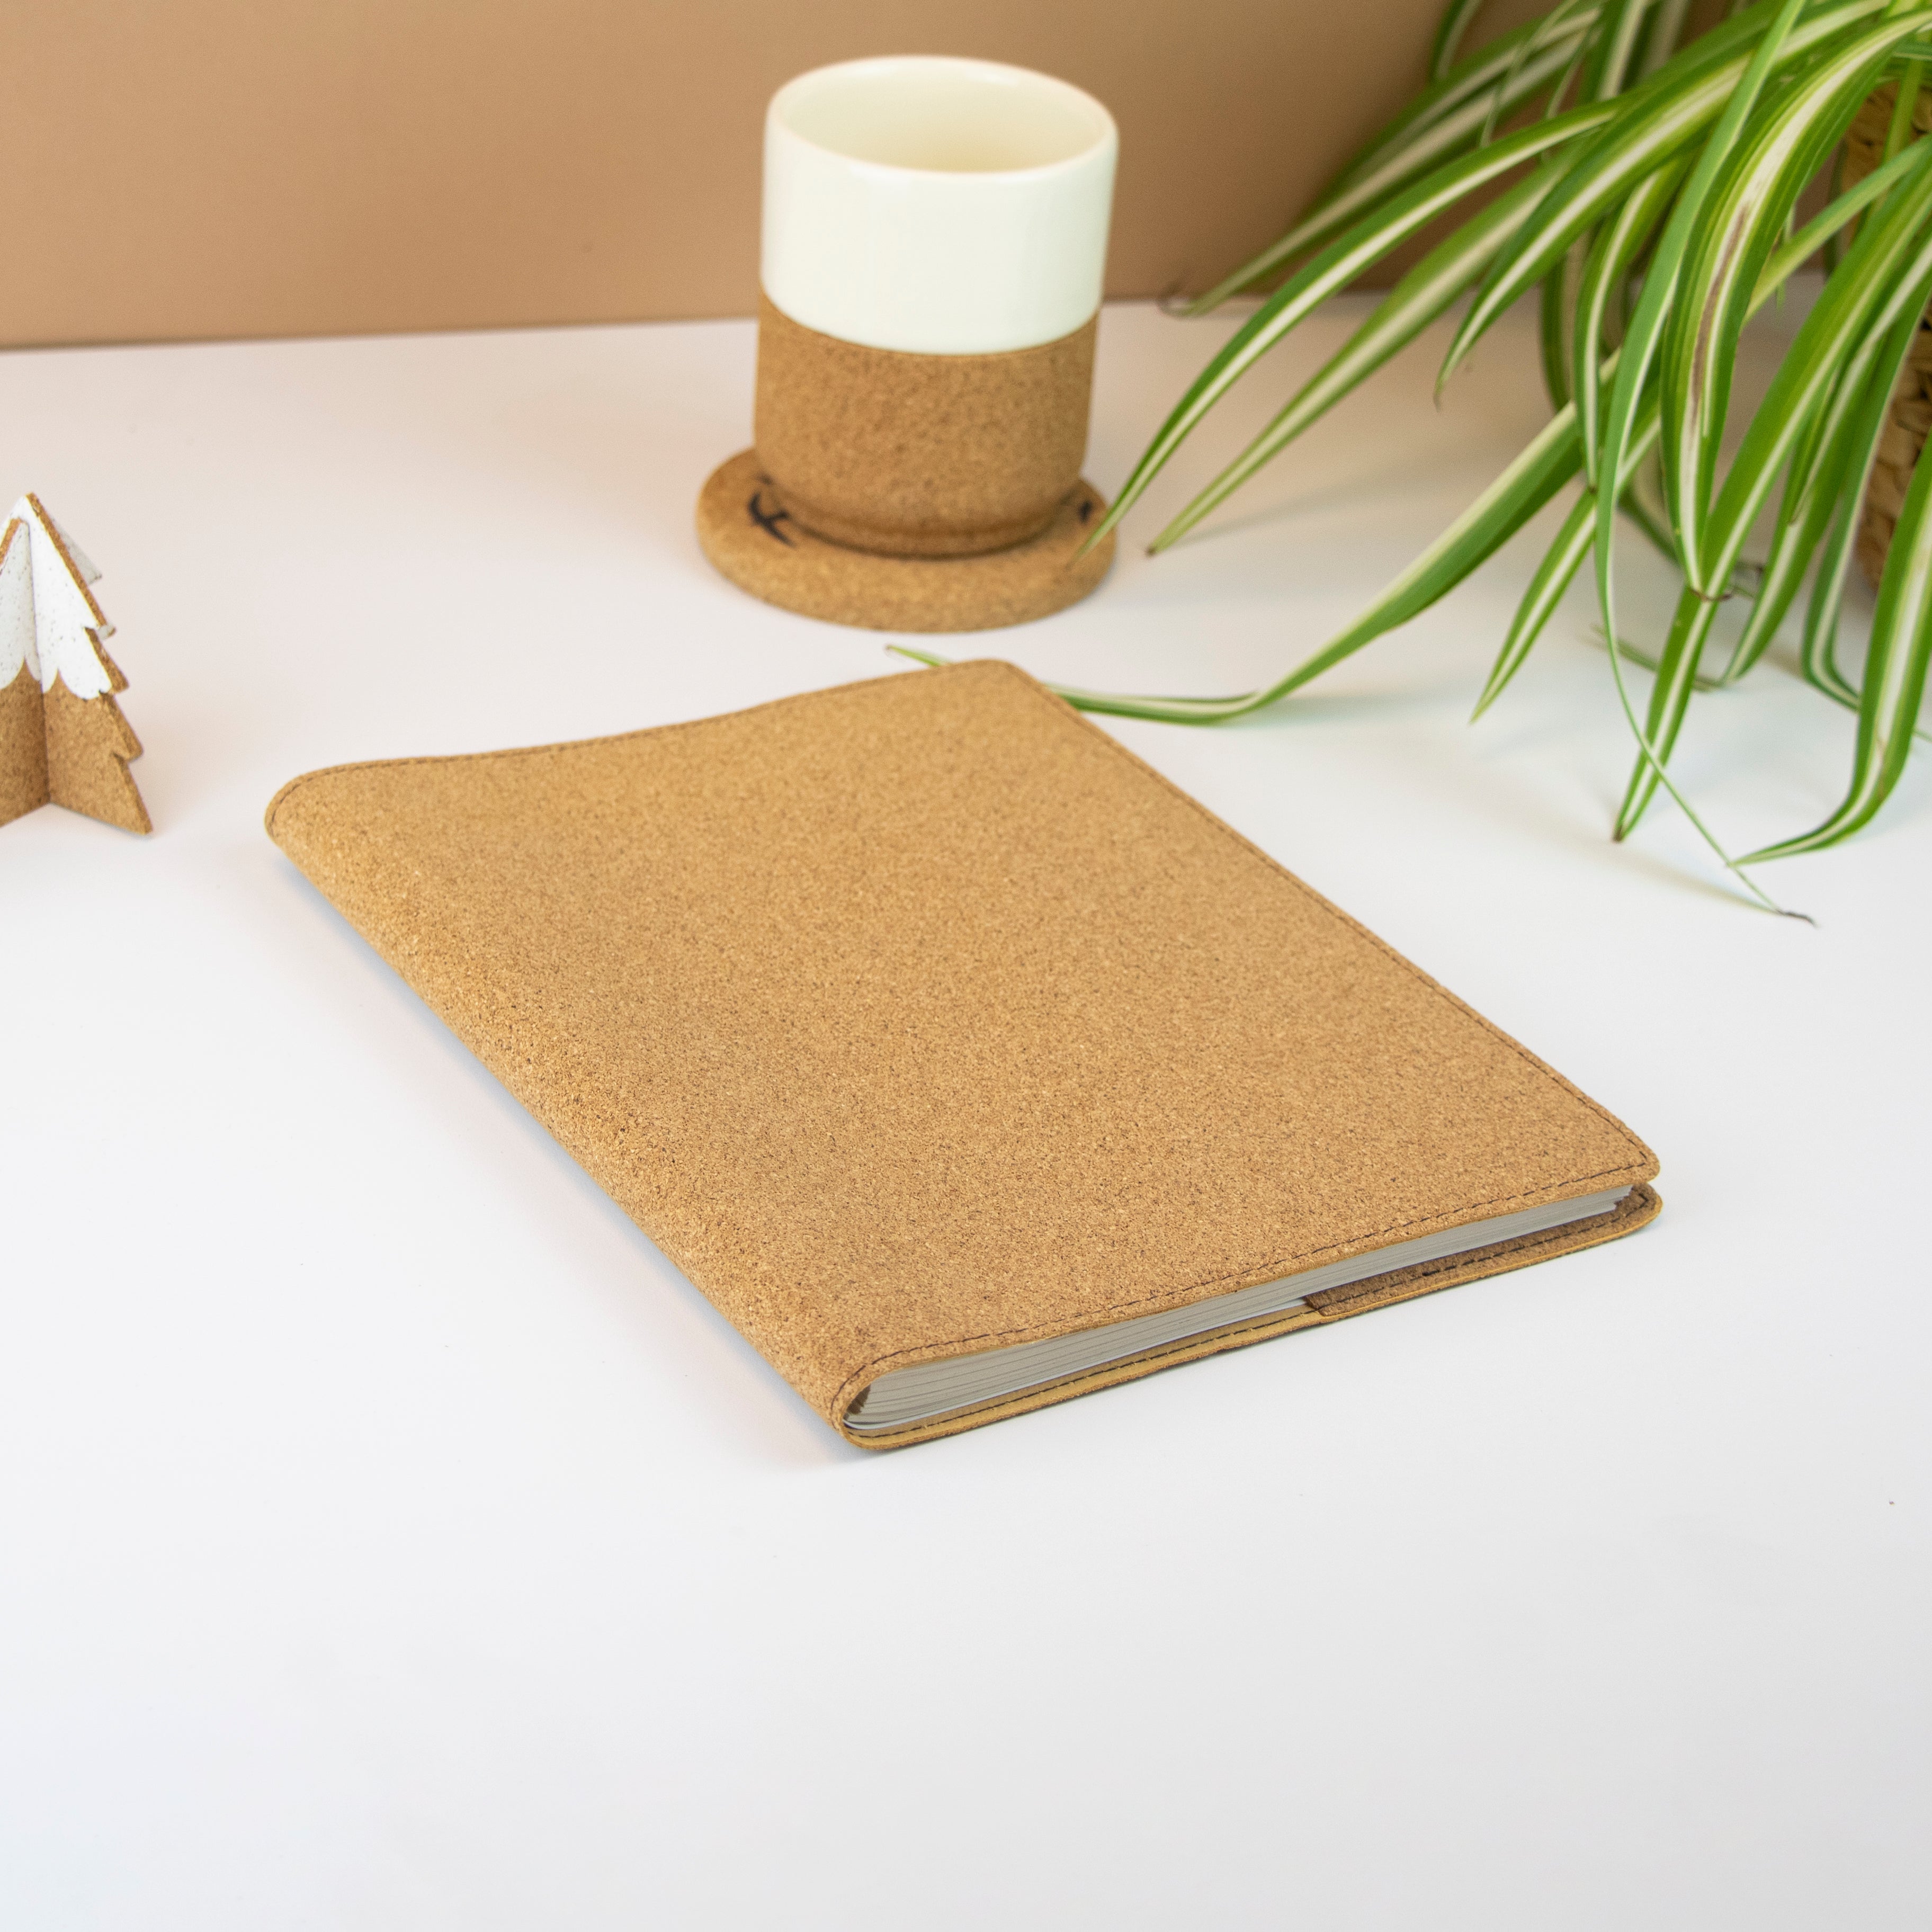 liga-eco-notebook-a5-refill-cover-or-sand